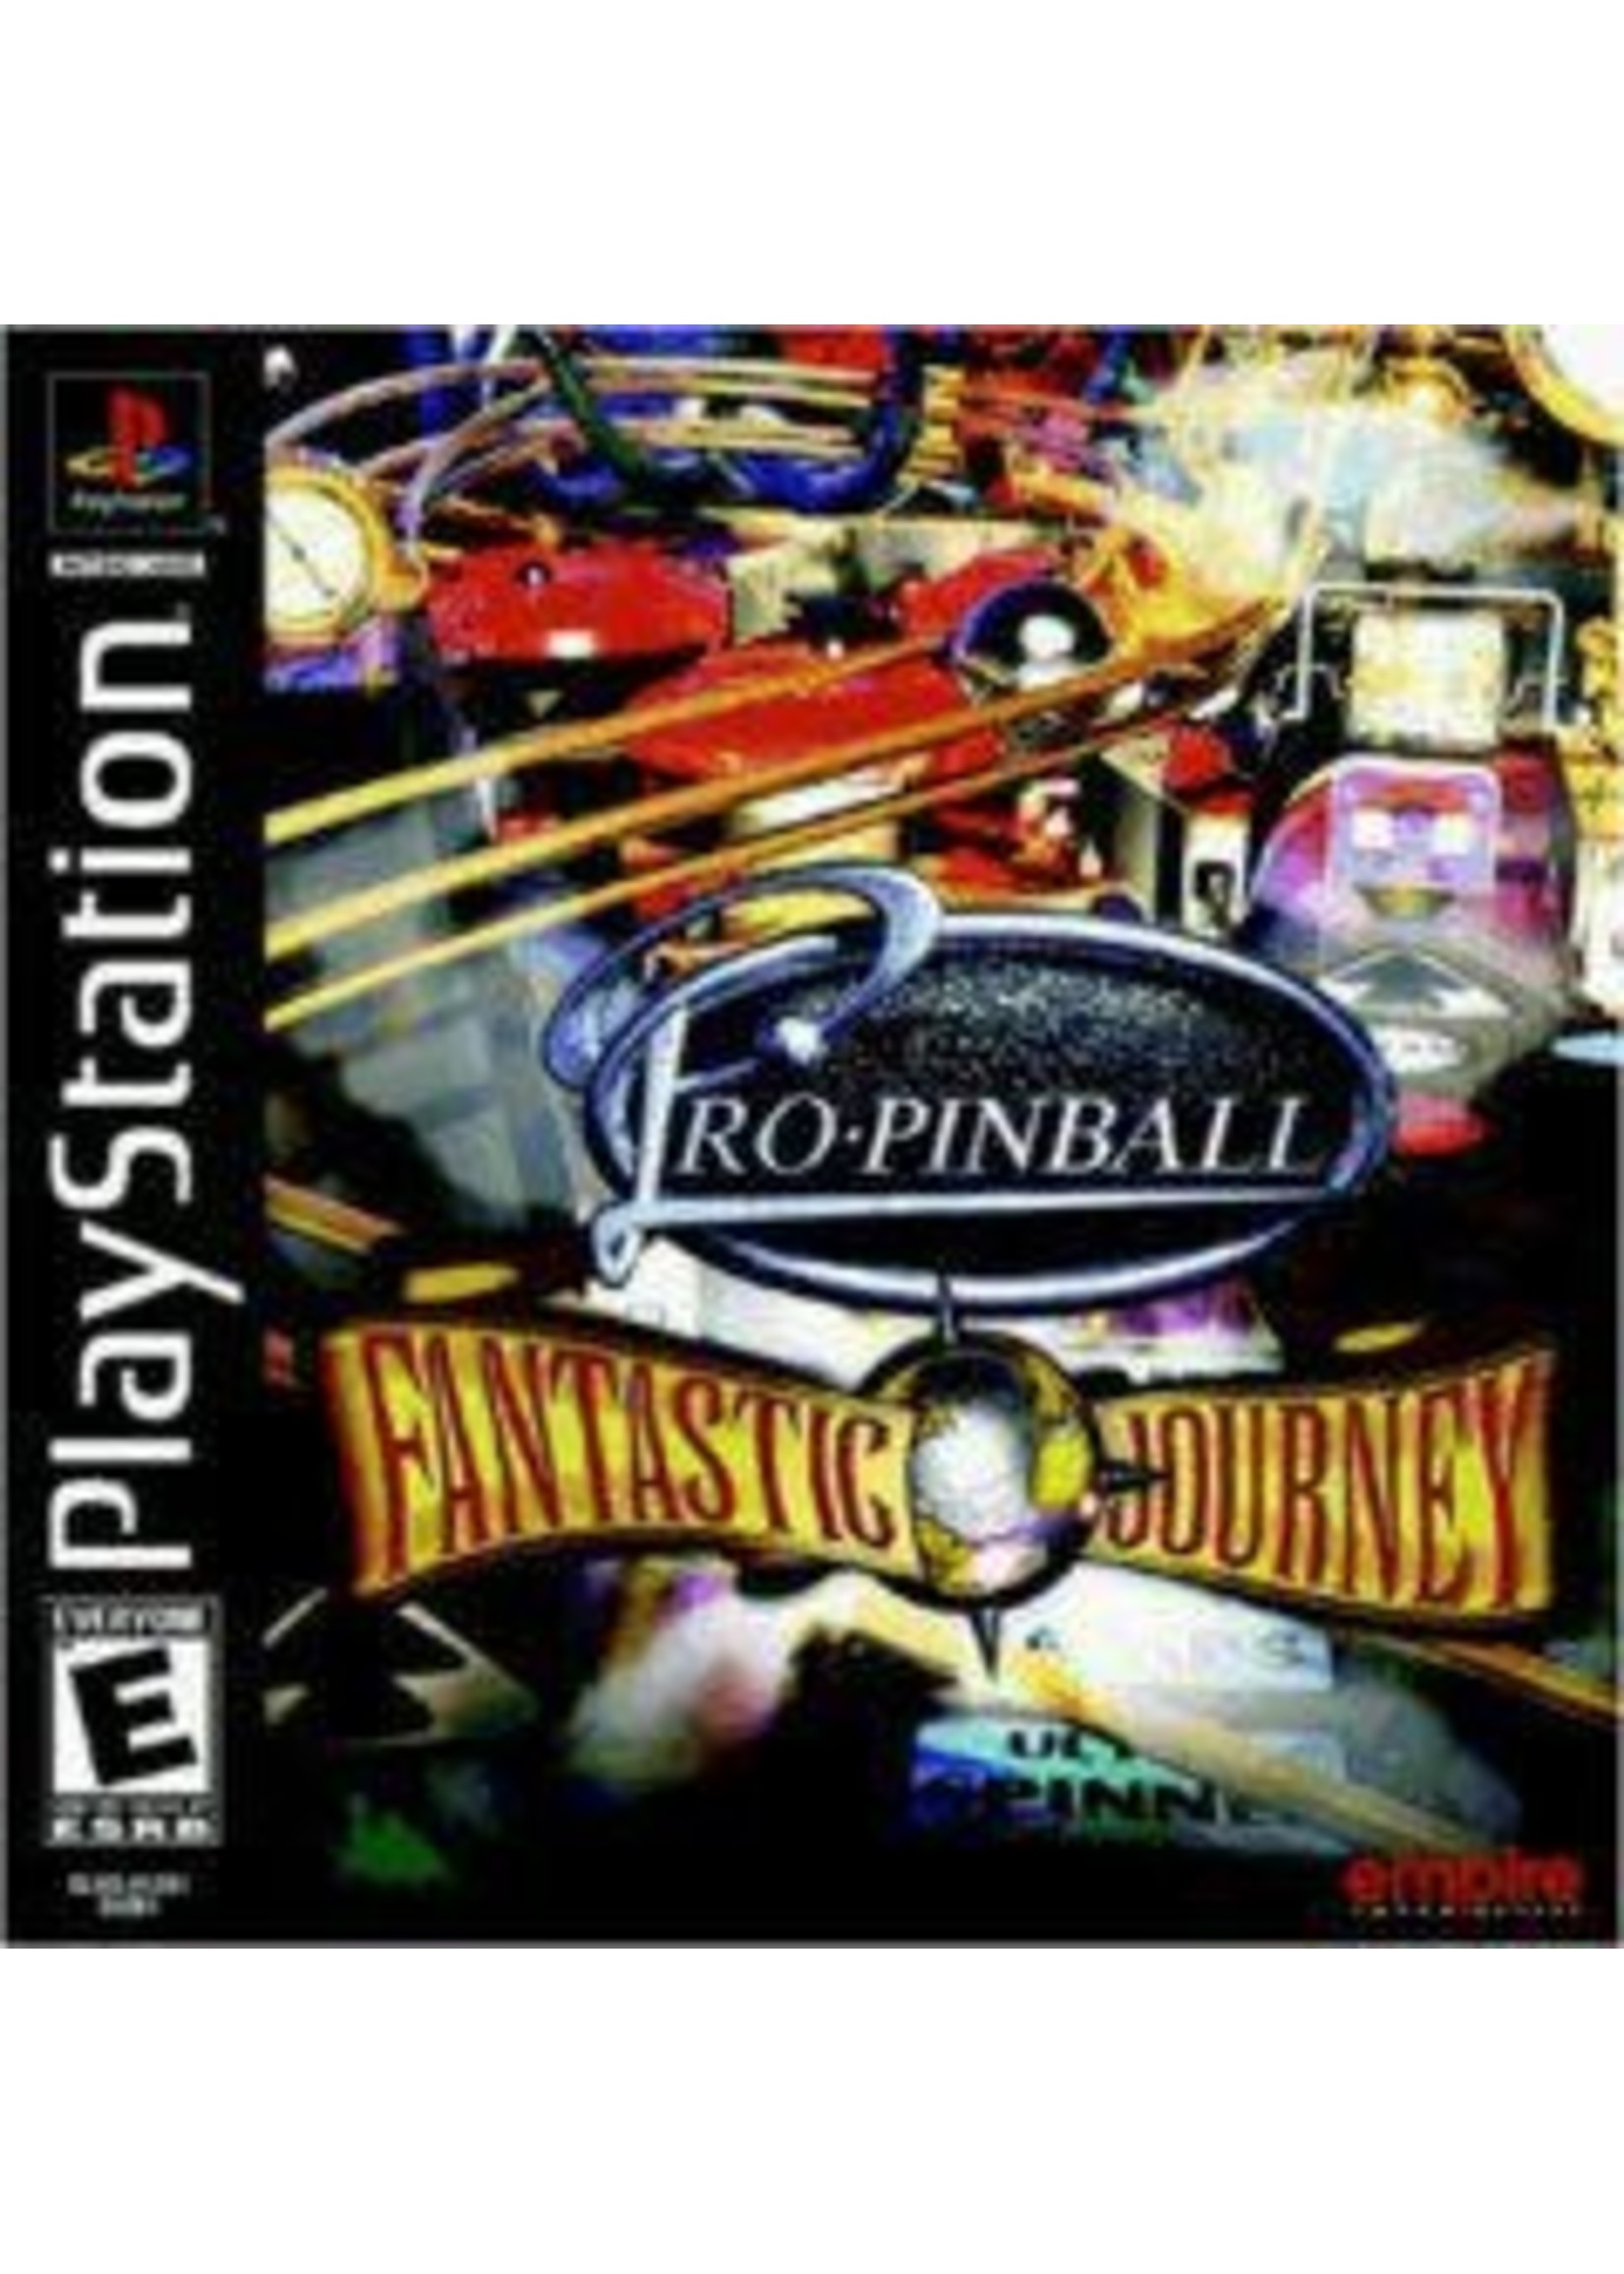 Pro Pinball Fantastic Journey Playstation